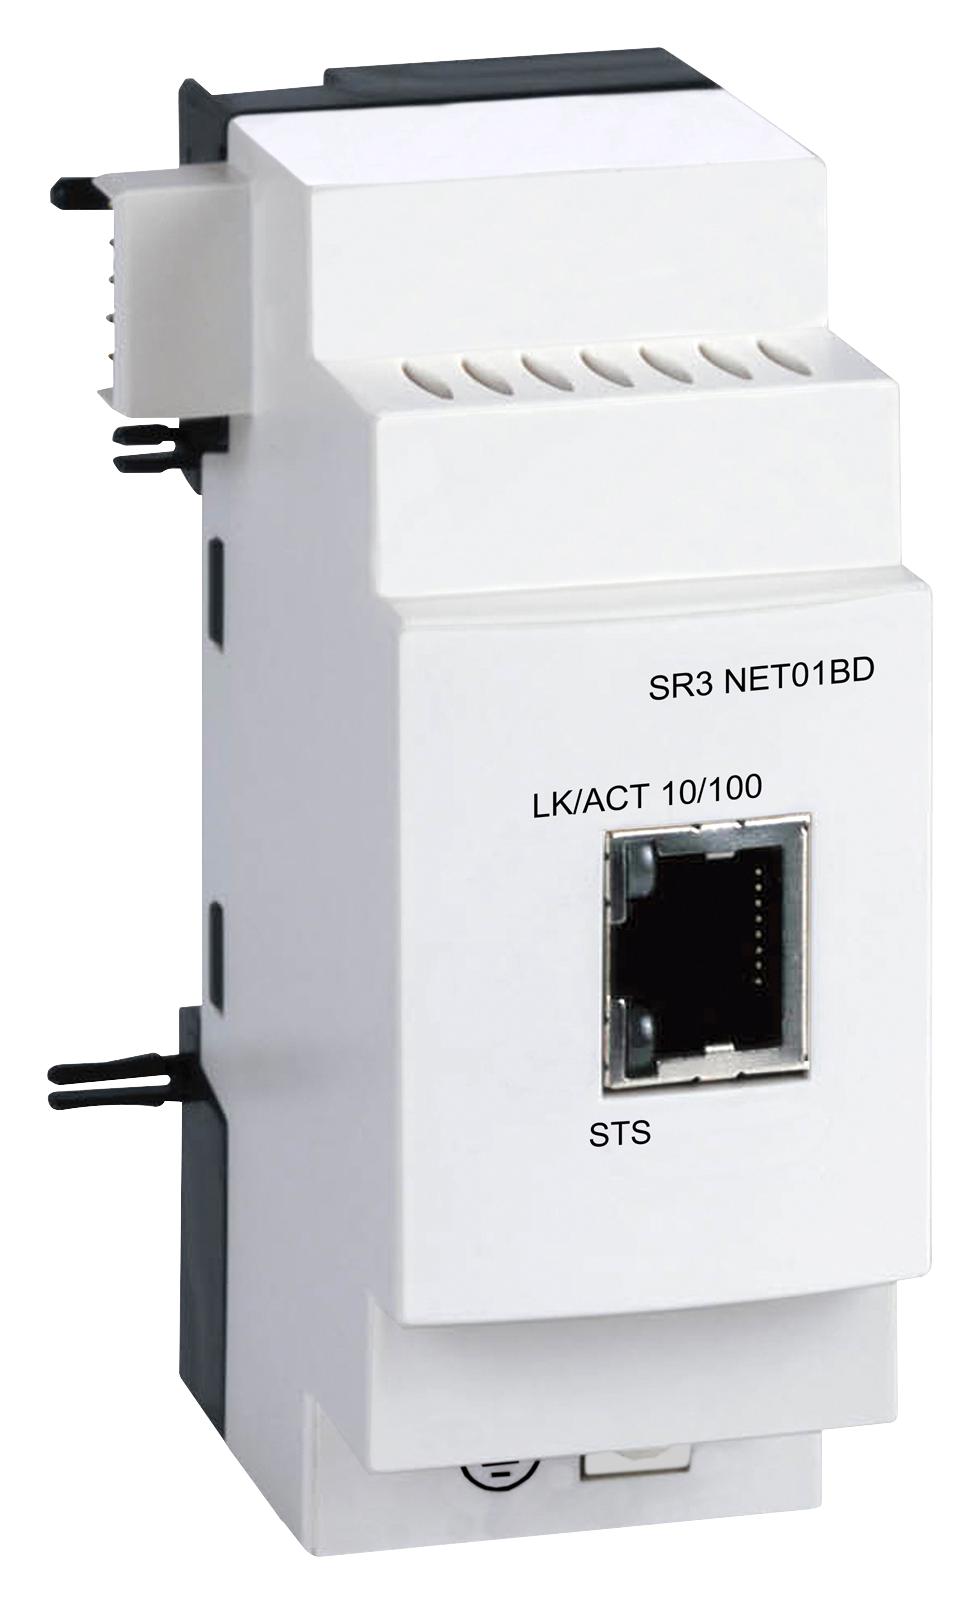 SR3NET01BD ETHERNET COMMUNICATION INTERFACE SCHNEIDER ELECTRIC